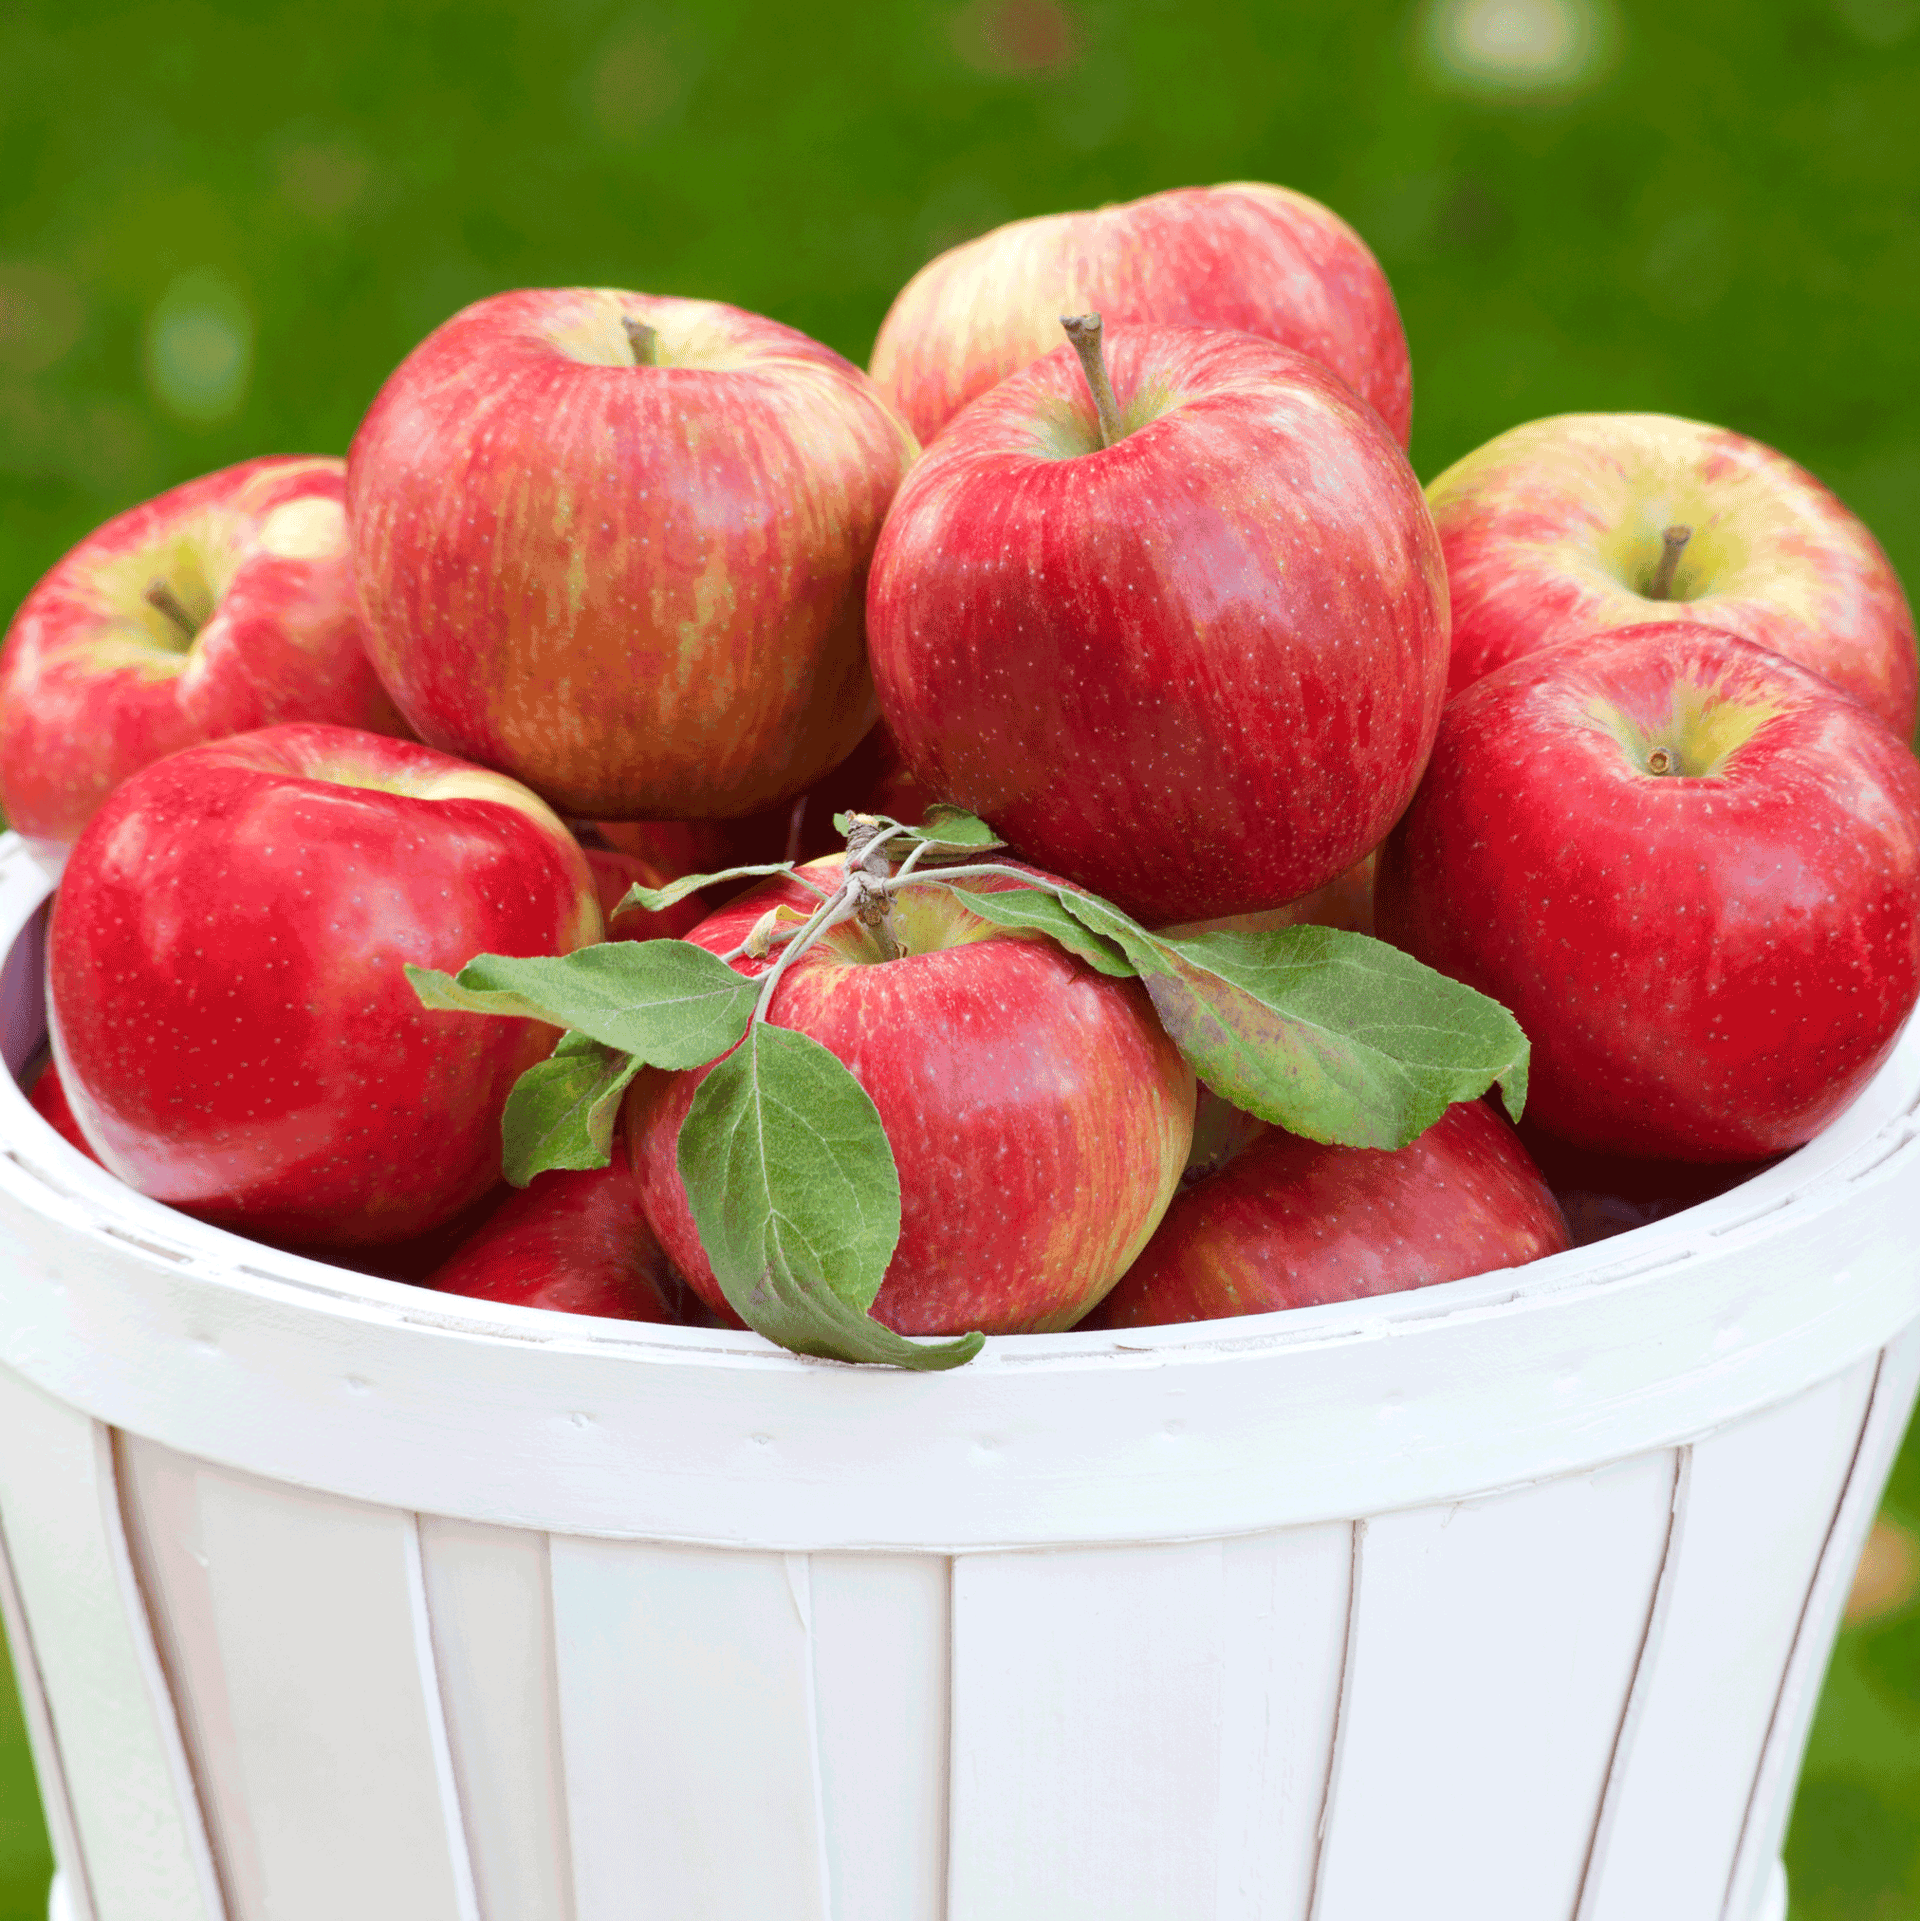 Honeycrisp™ Apple Tree